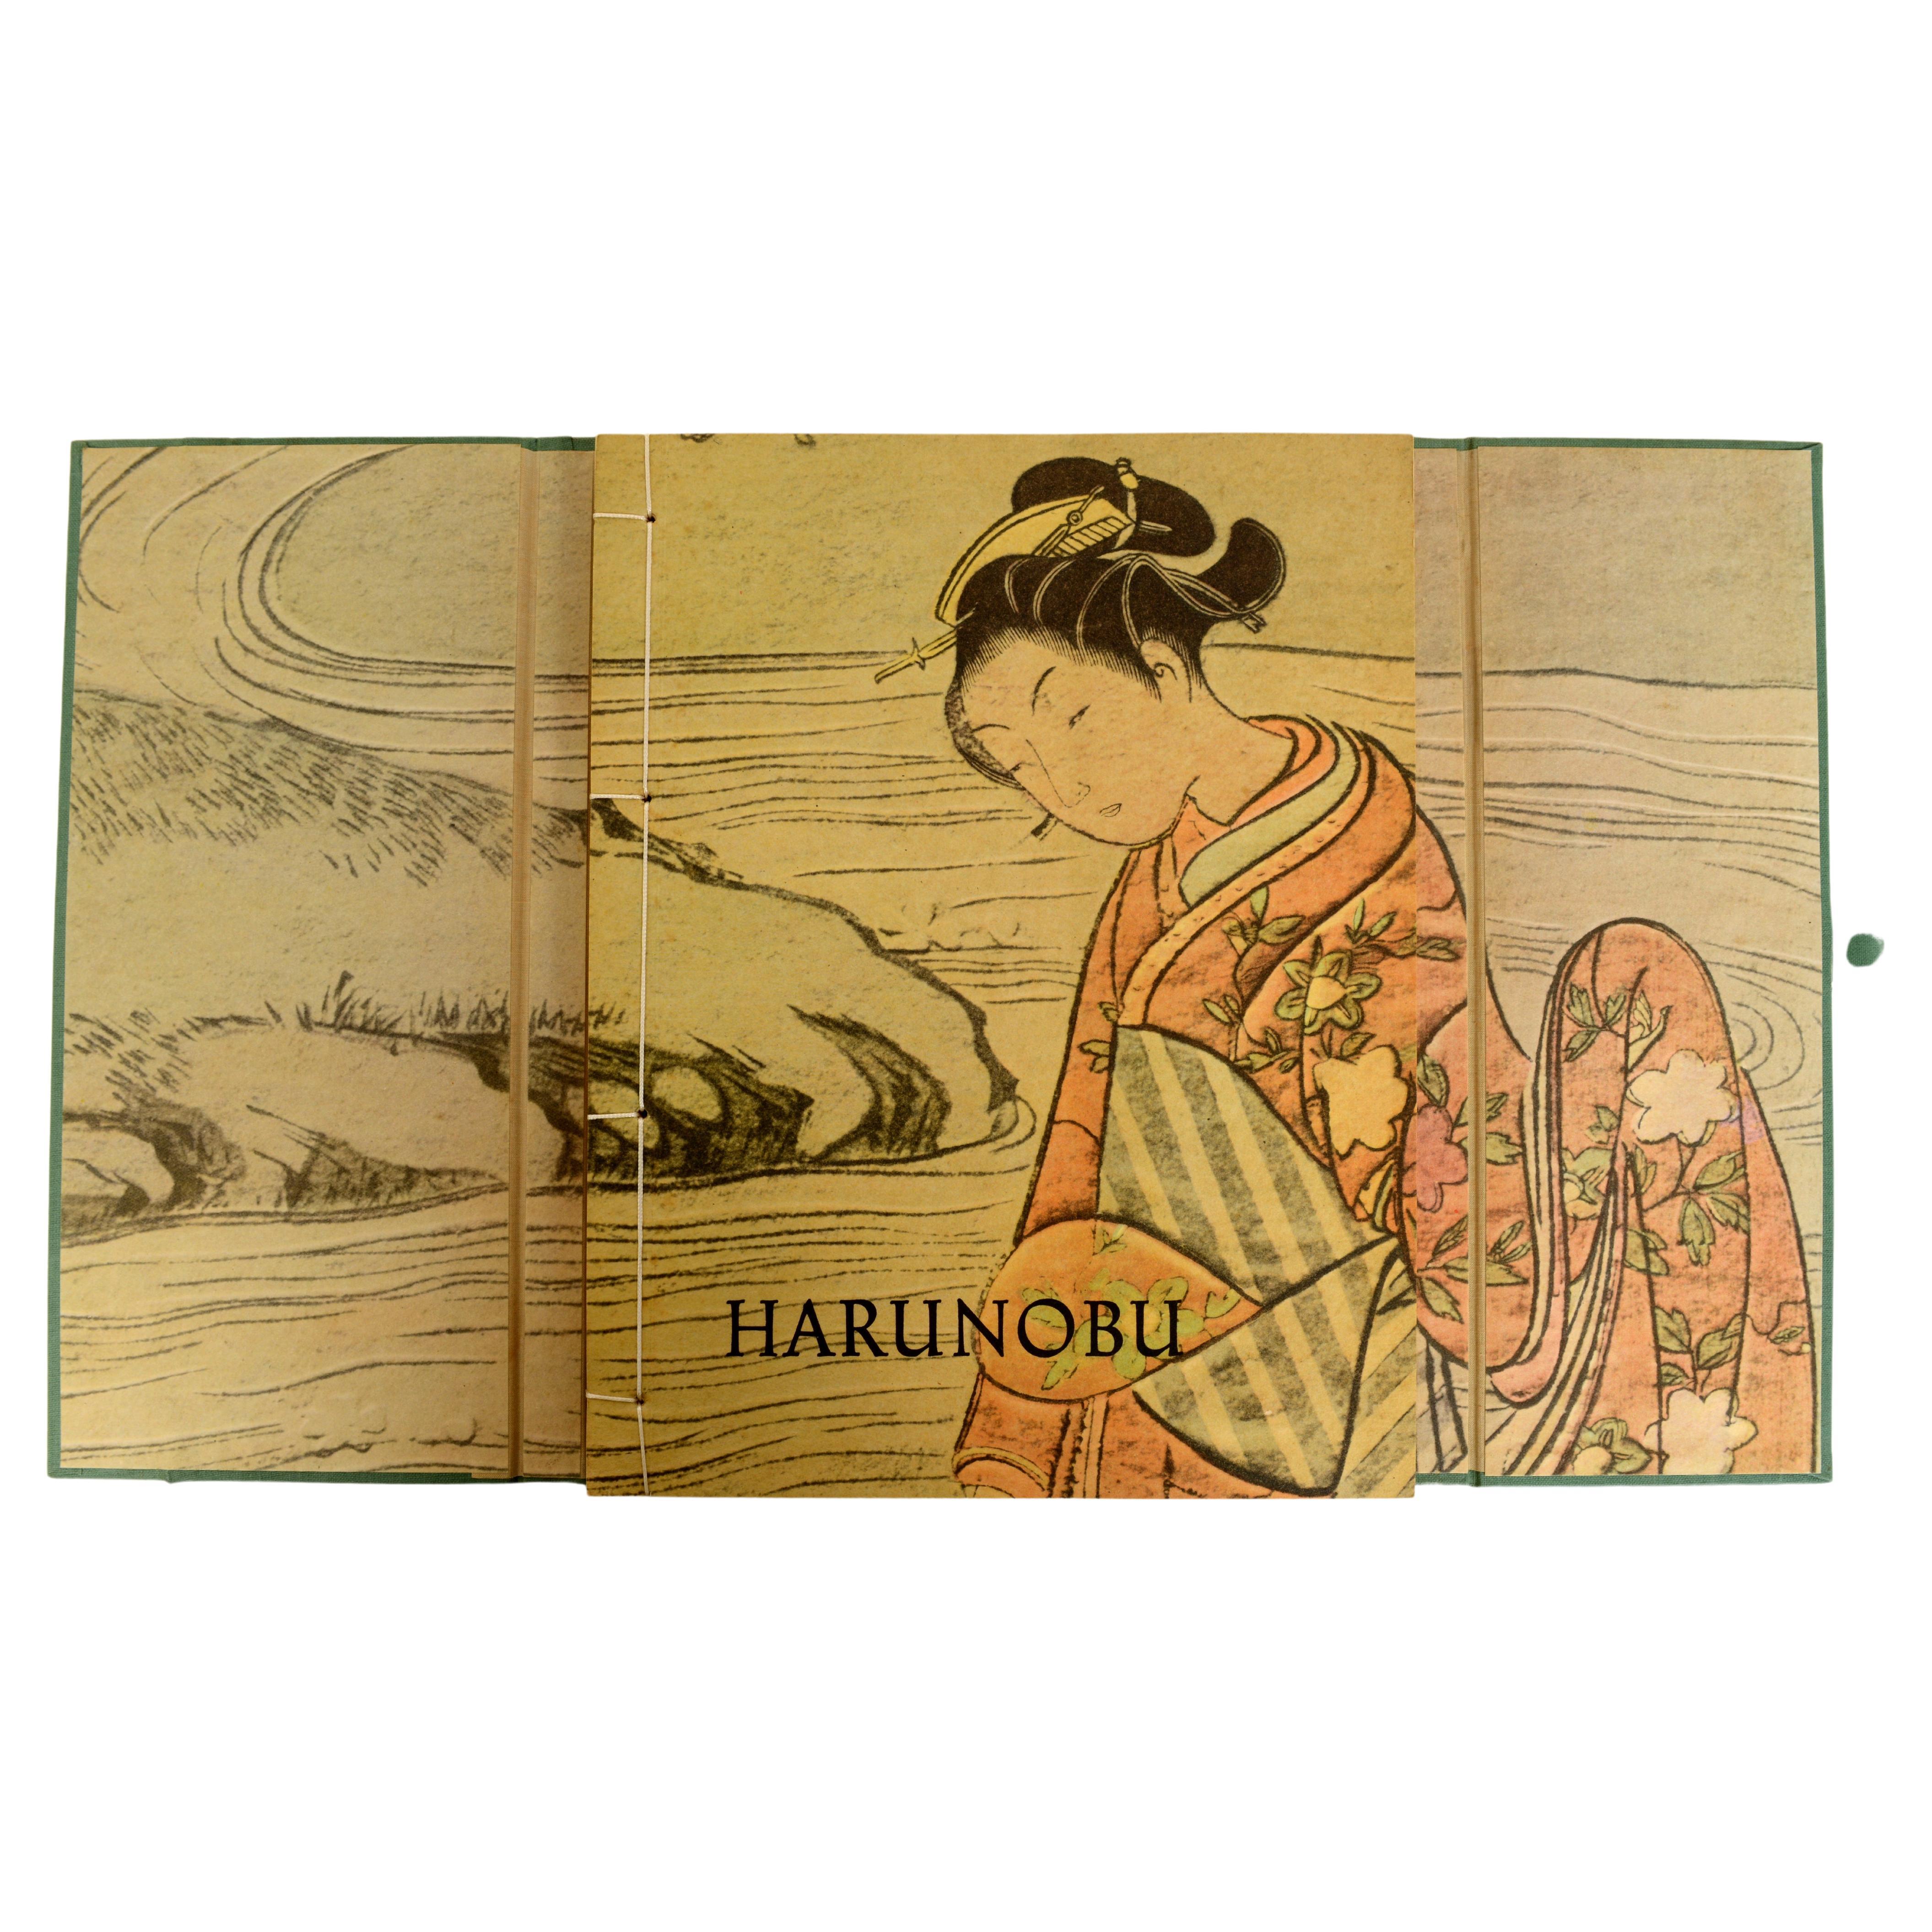 Harunobu by Lubor Hajek, translated by Hedda Vessela Stranska, 1st Ed